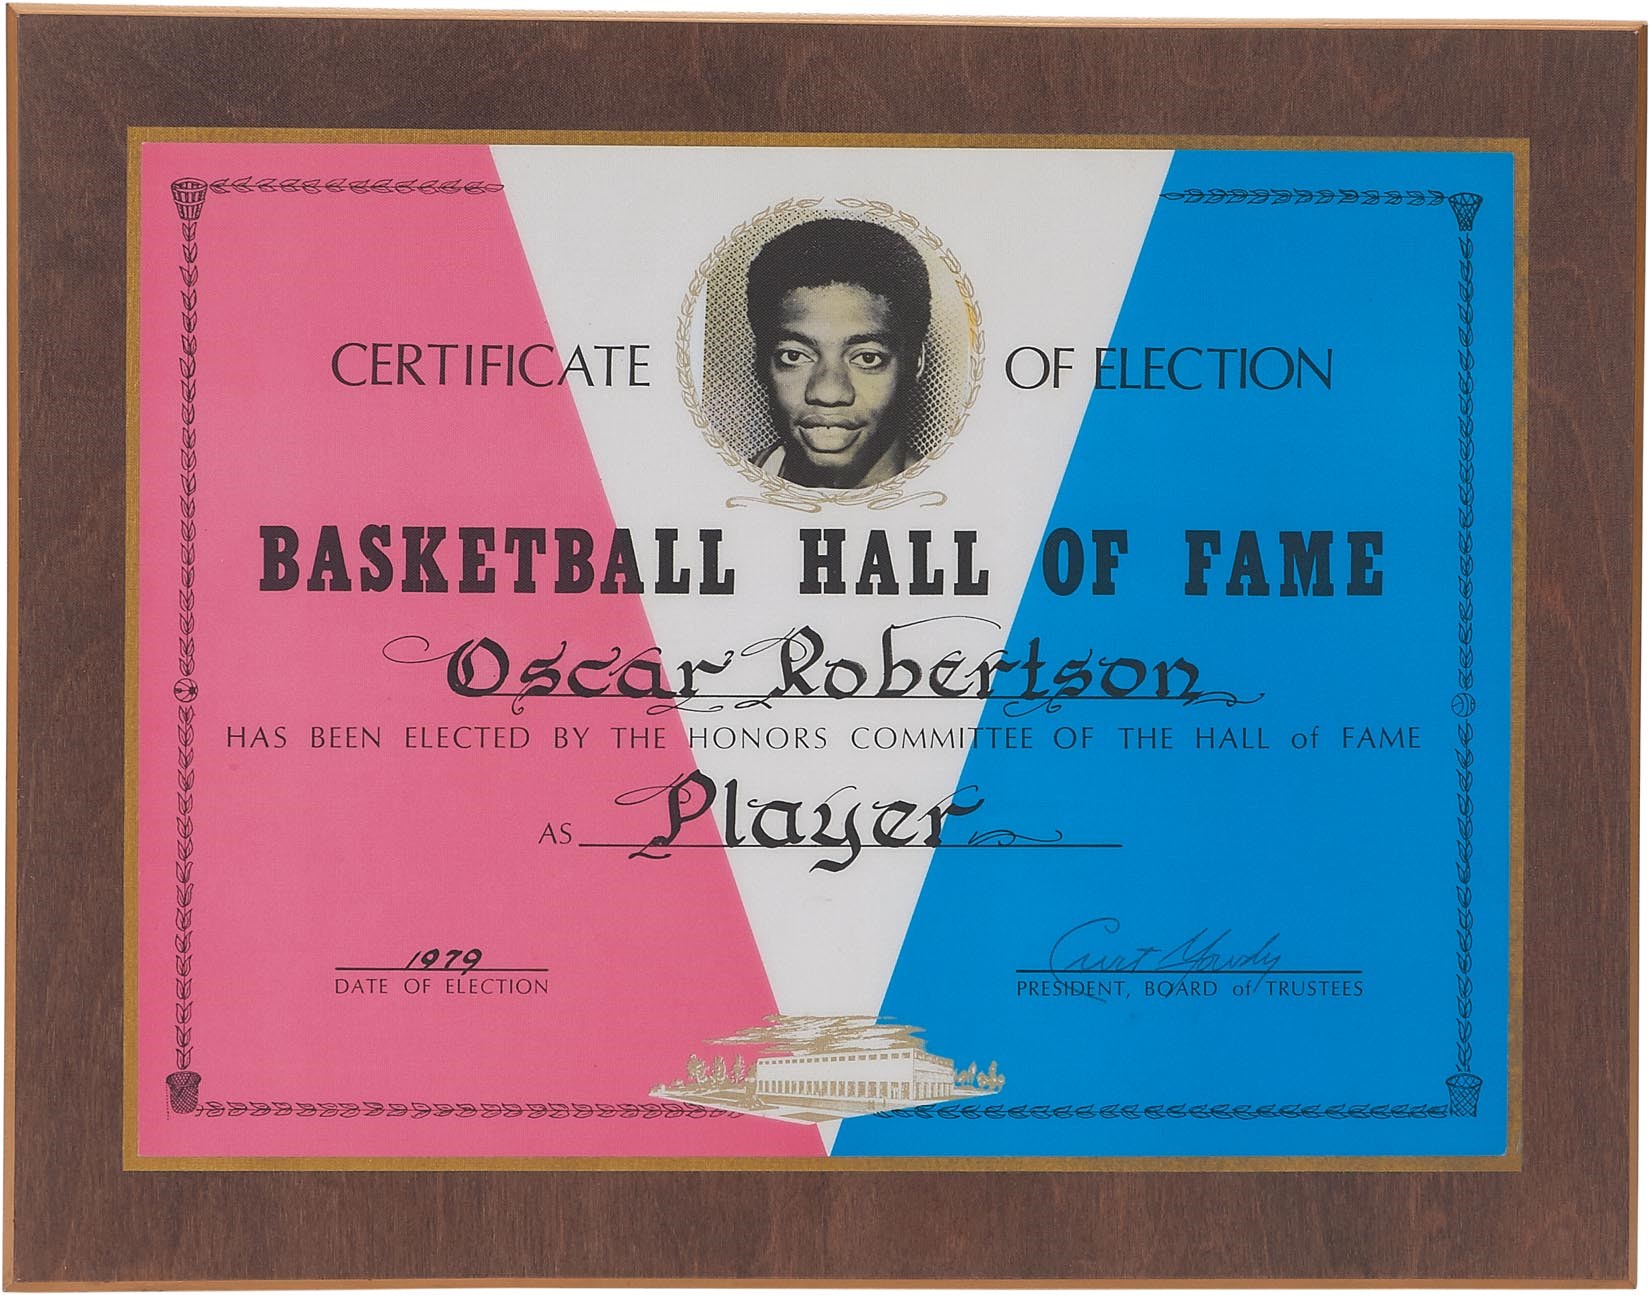 The Oscar Robertson Collection - Oscar Robertson Basketball Hall of Fame Certificate of Election